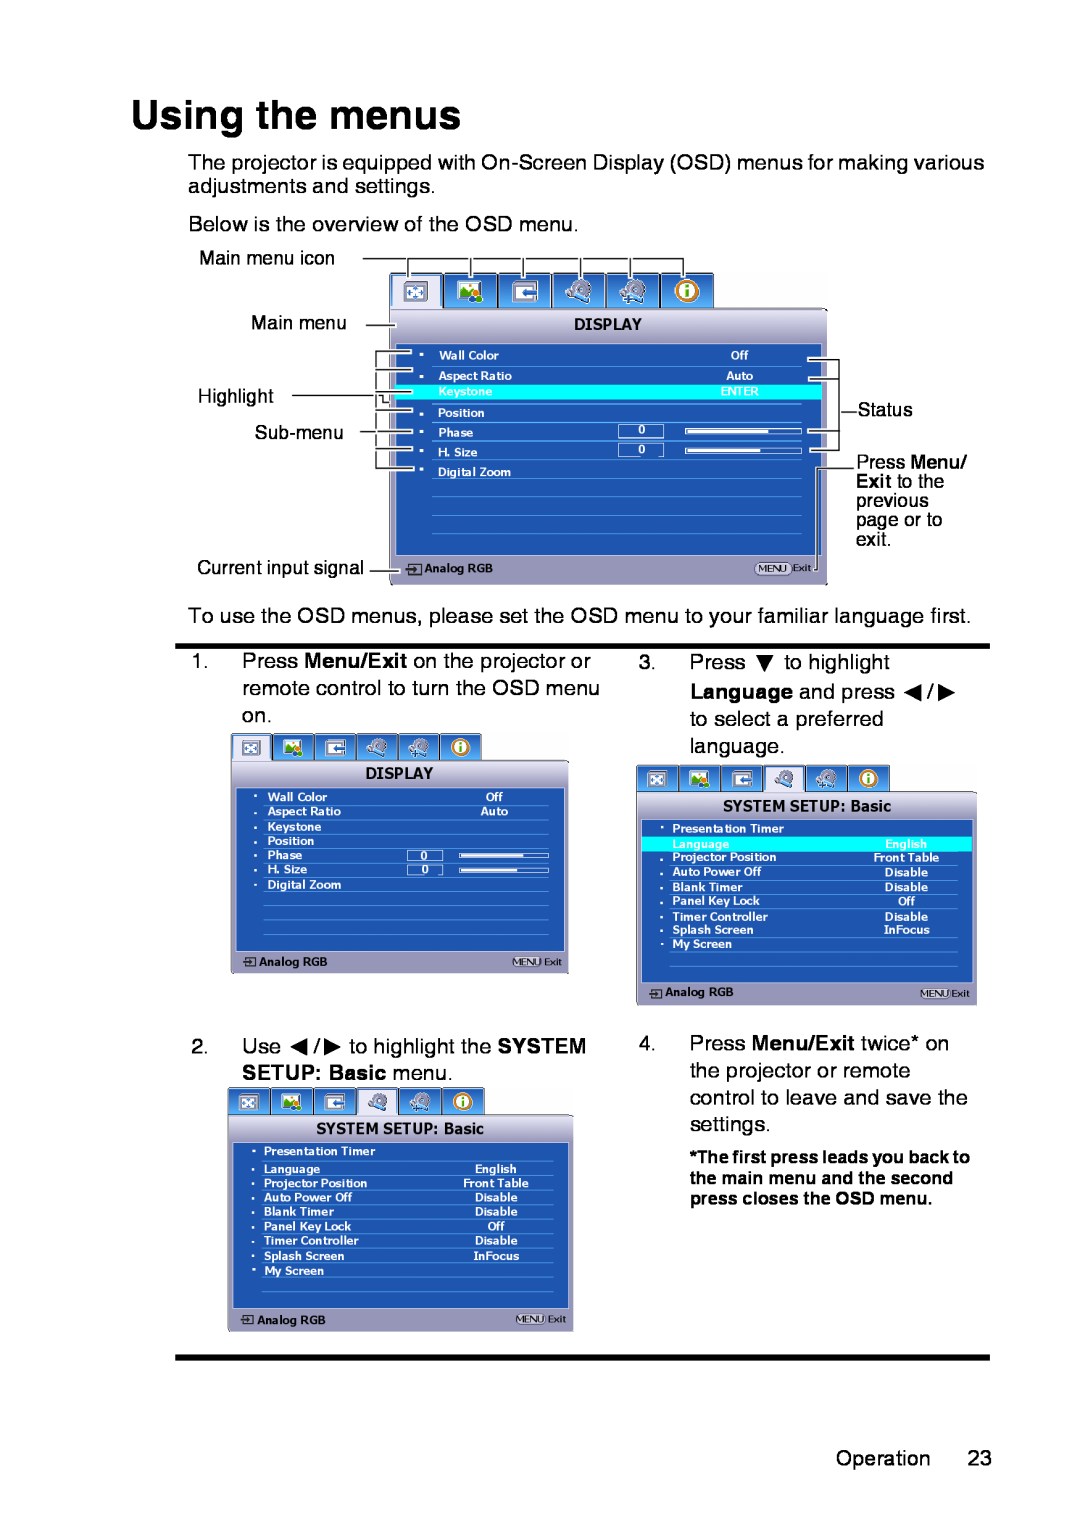 InFocus XS1 manual Using the menus, Operation 